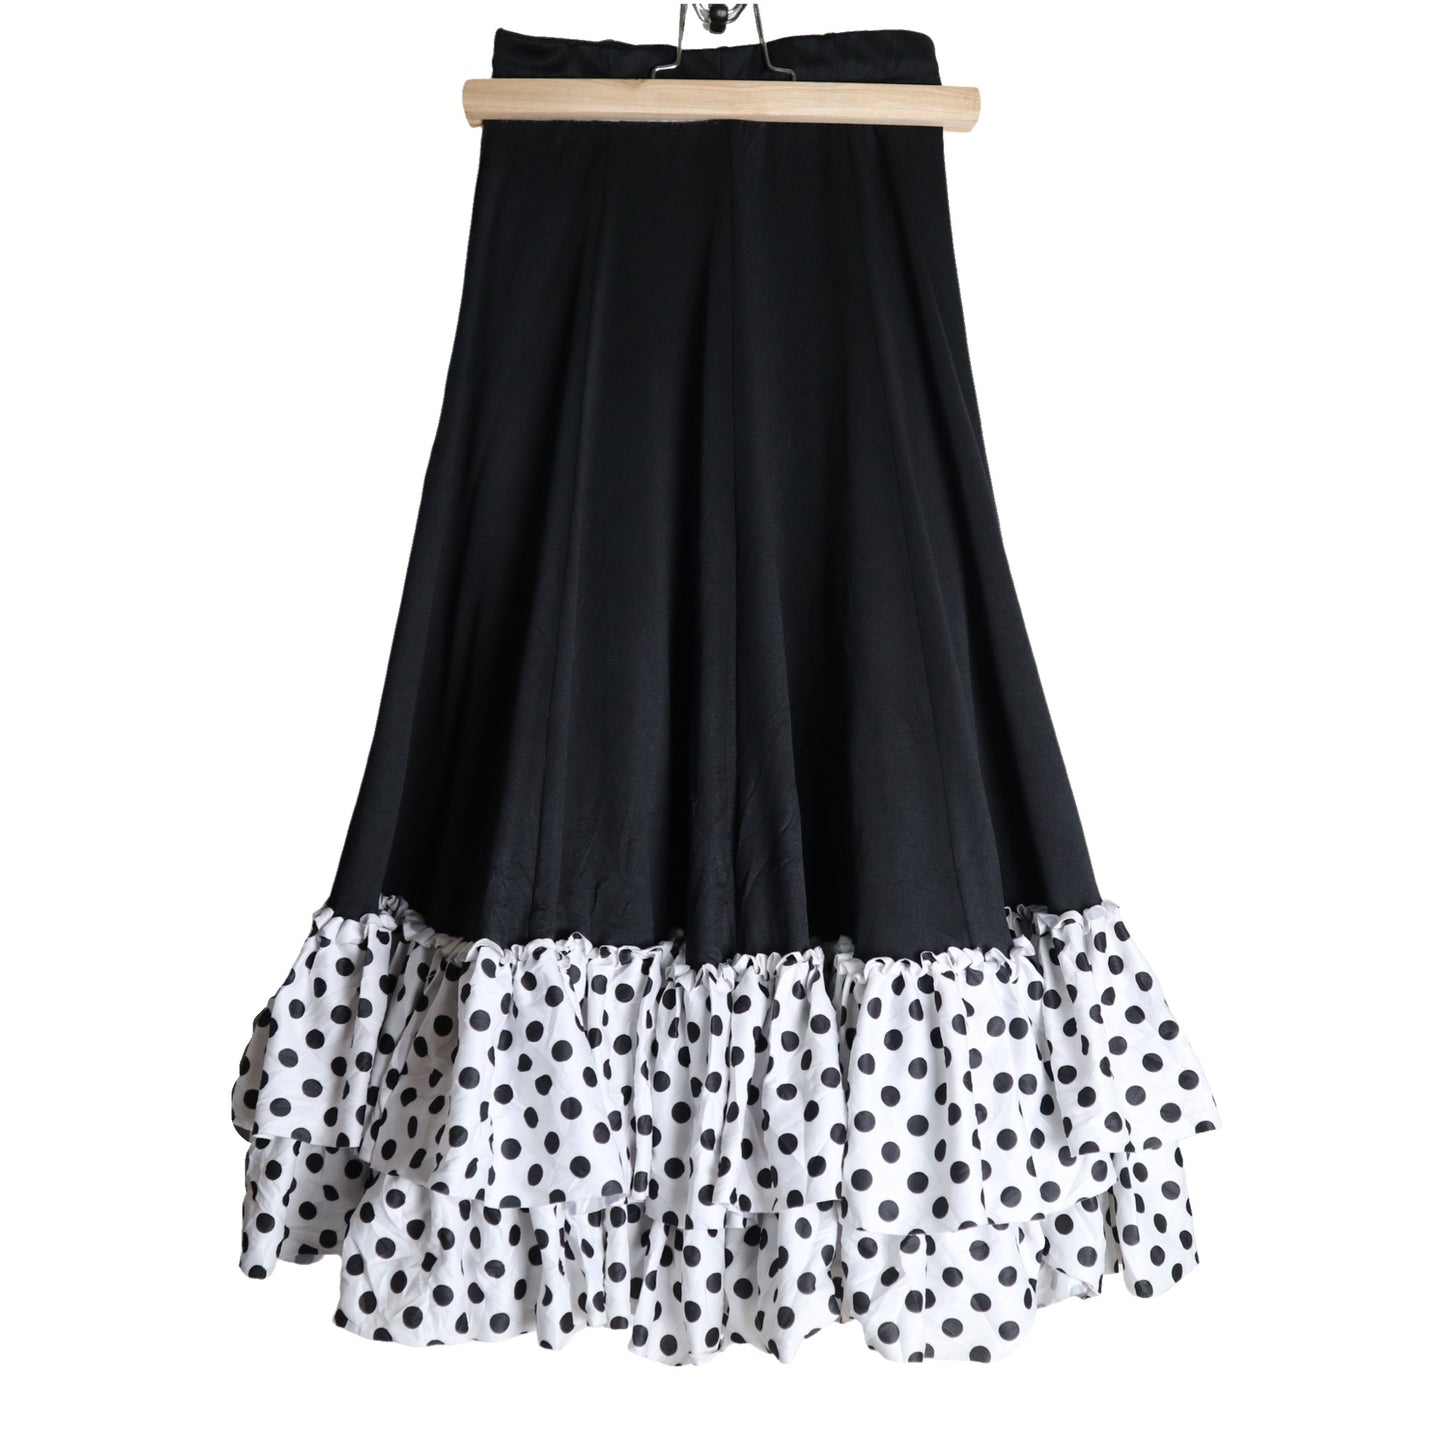 黑白點點 蛋糕裙 dancing Skirt